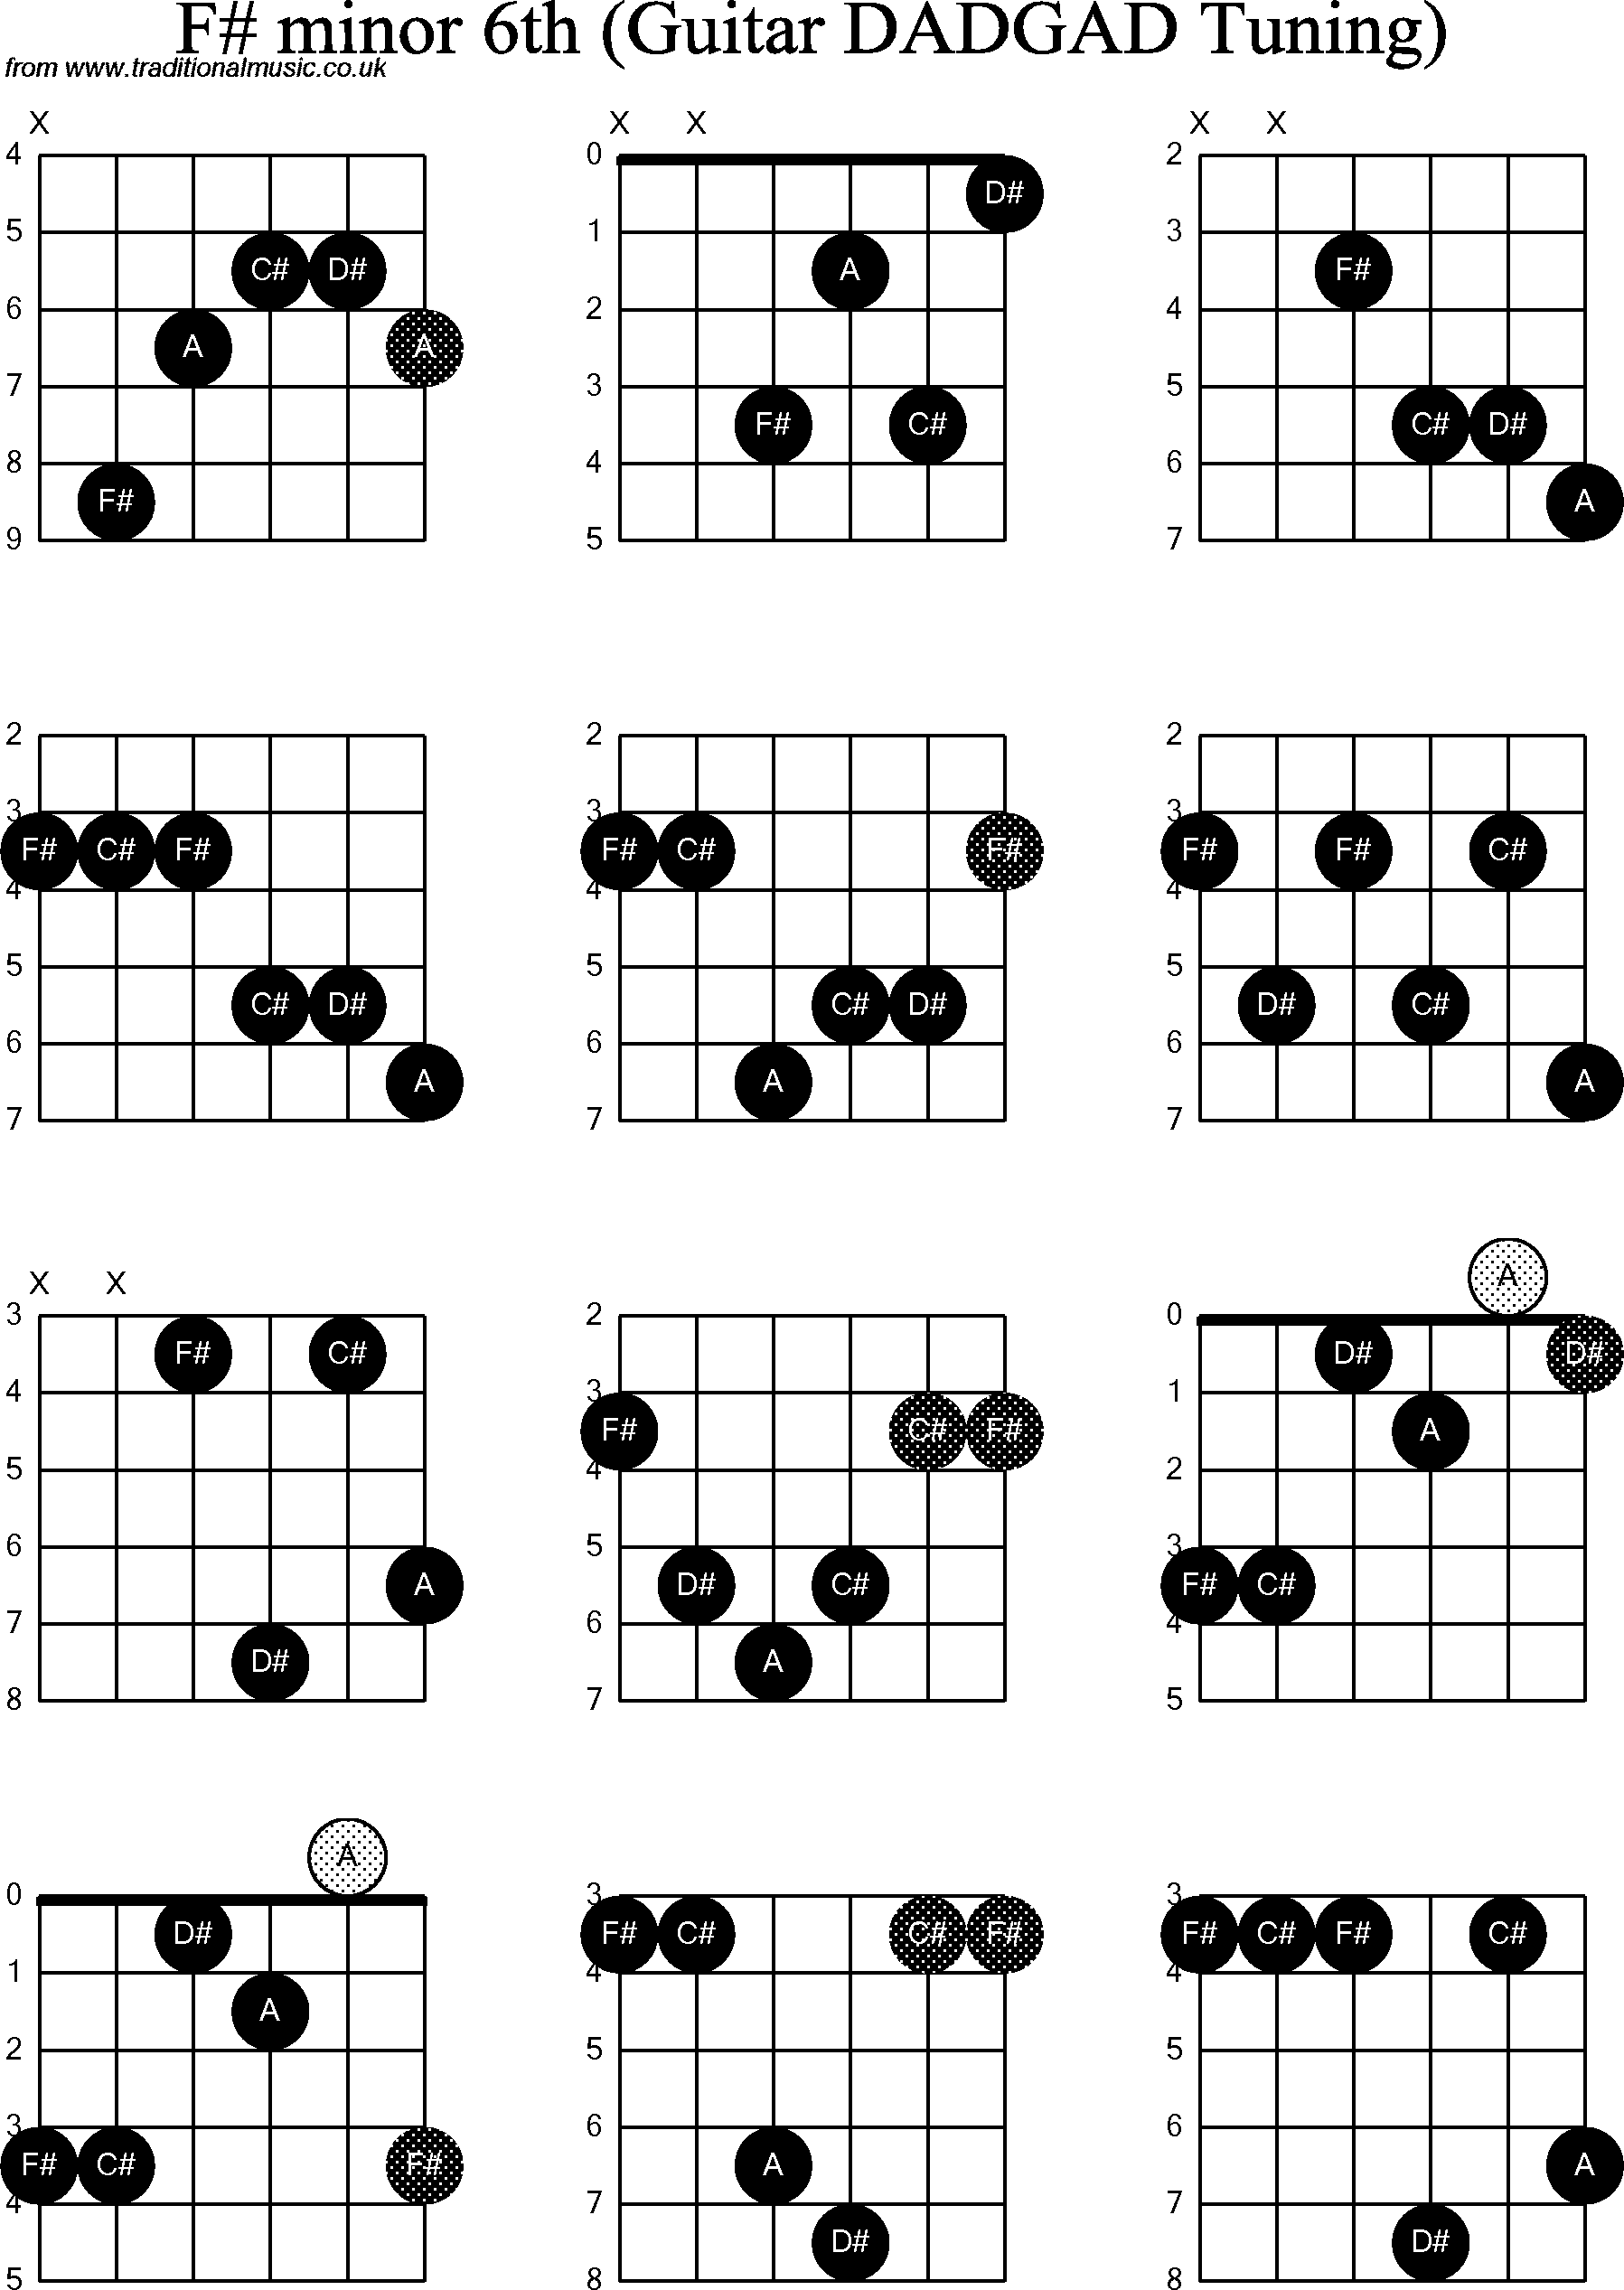 Chord Diagrams for D Modal Guitar(DADGAD), F Sharp Minor6th